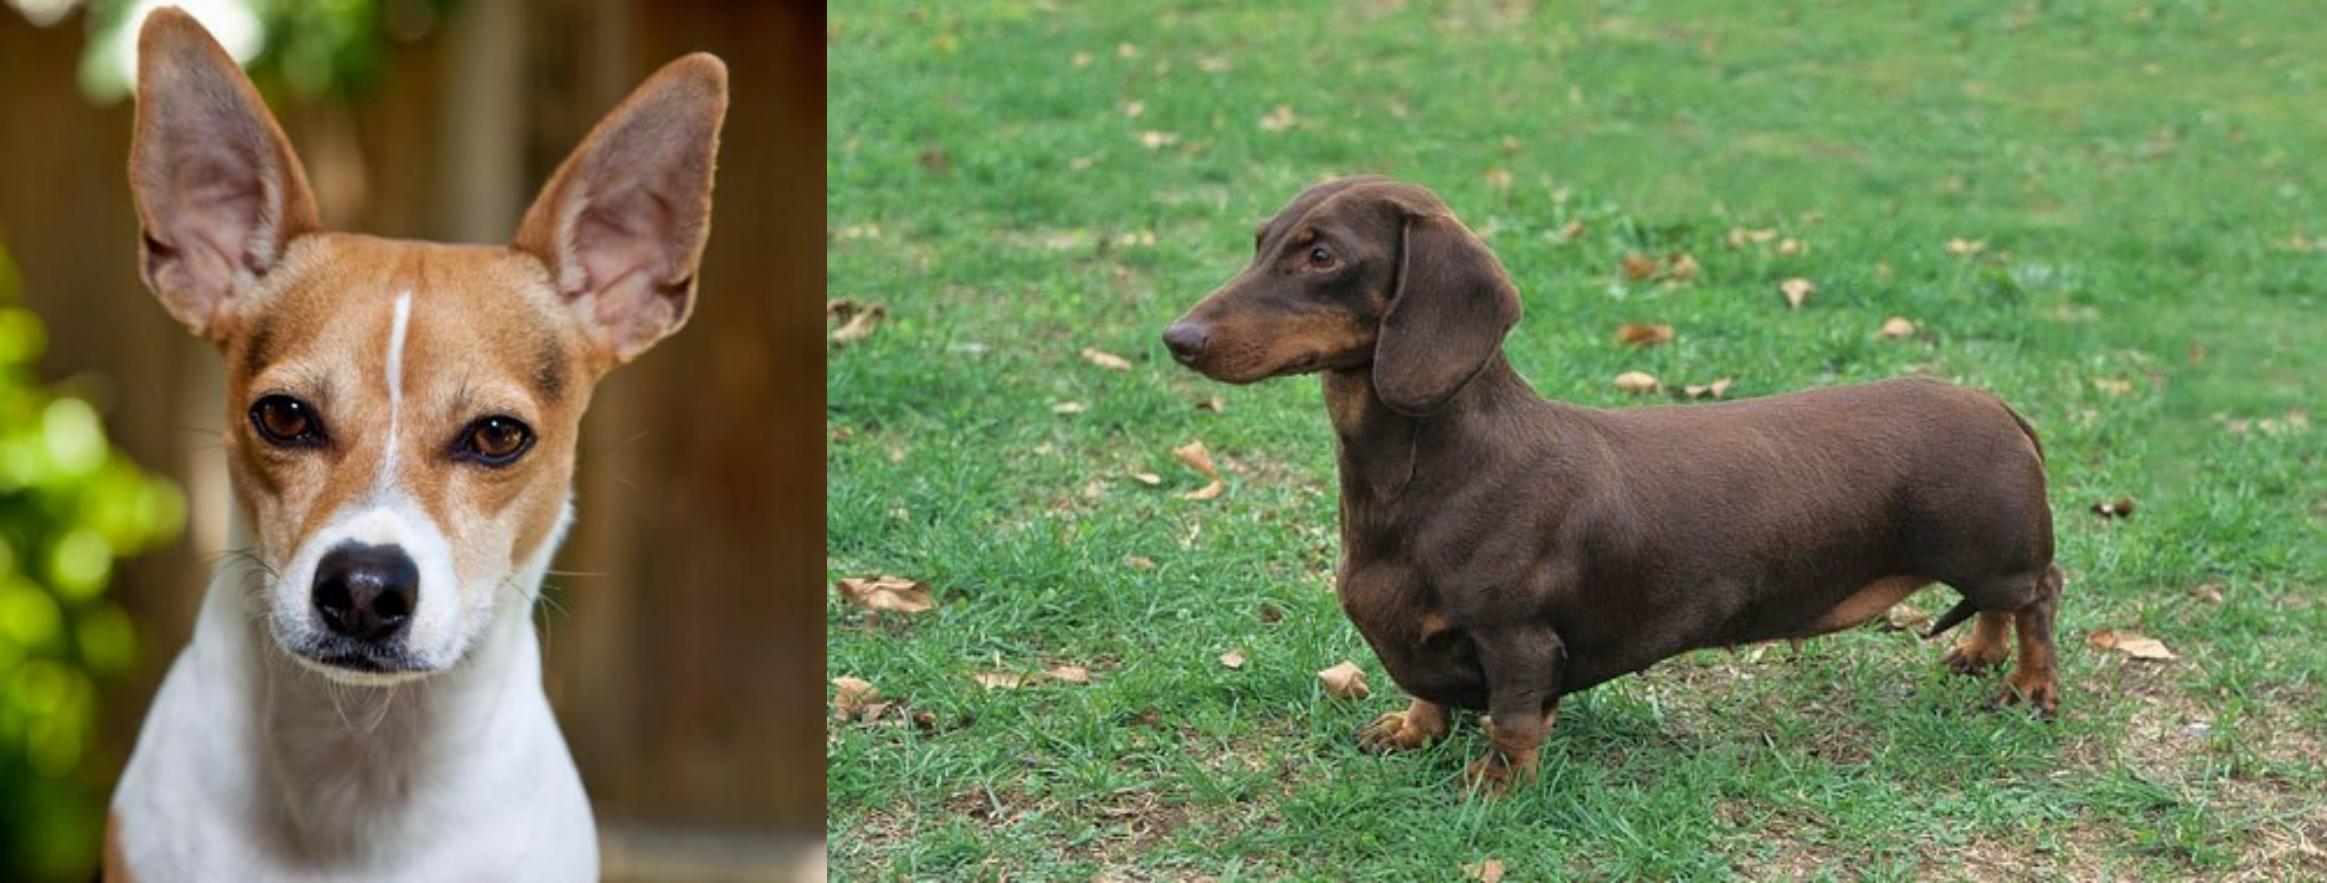 Rat Terrier vs Dachshund Breed Comparison MyDogBreeds